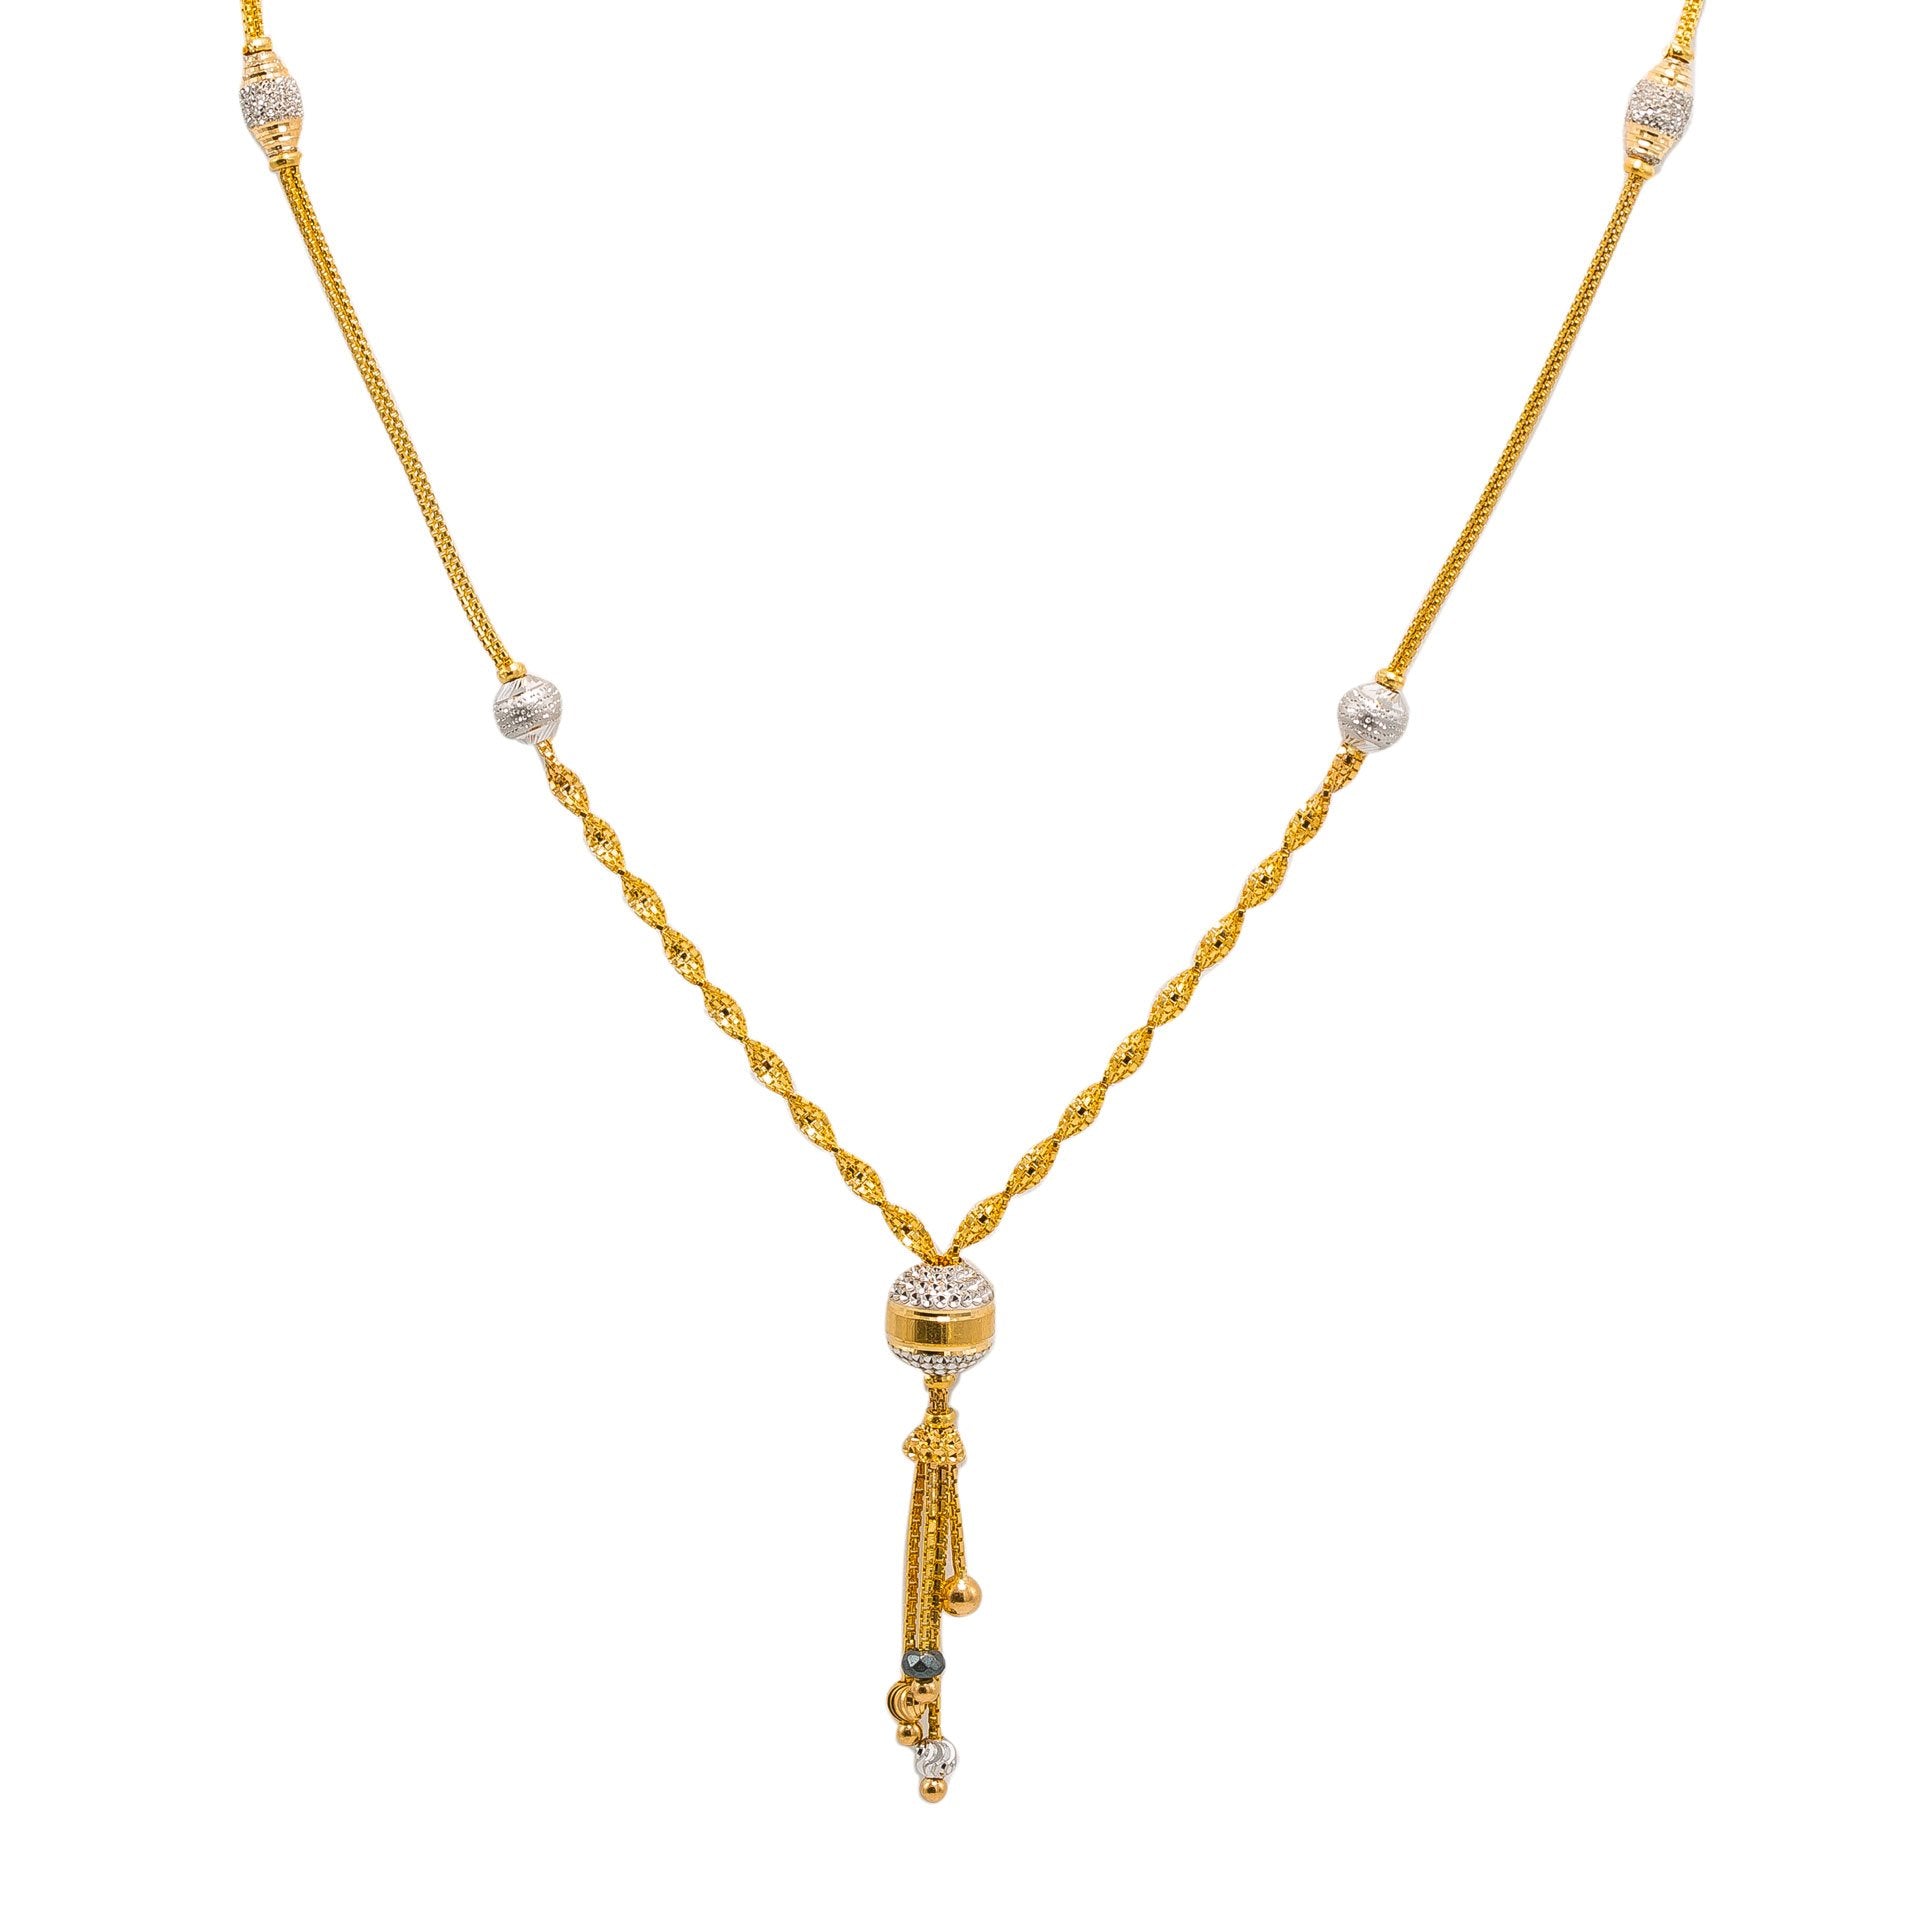 Gold necklace ladies 18k 750 Italian hallmark 46.7 Grams | eBay